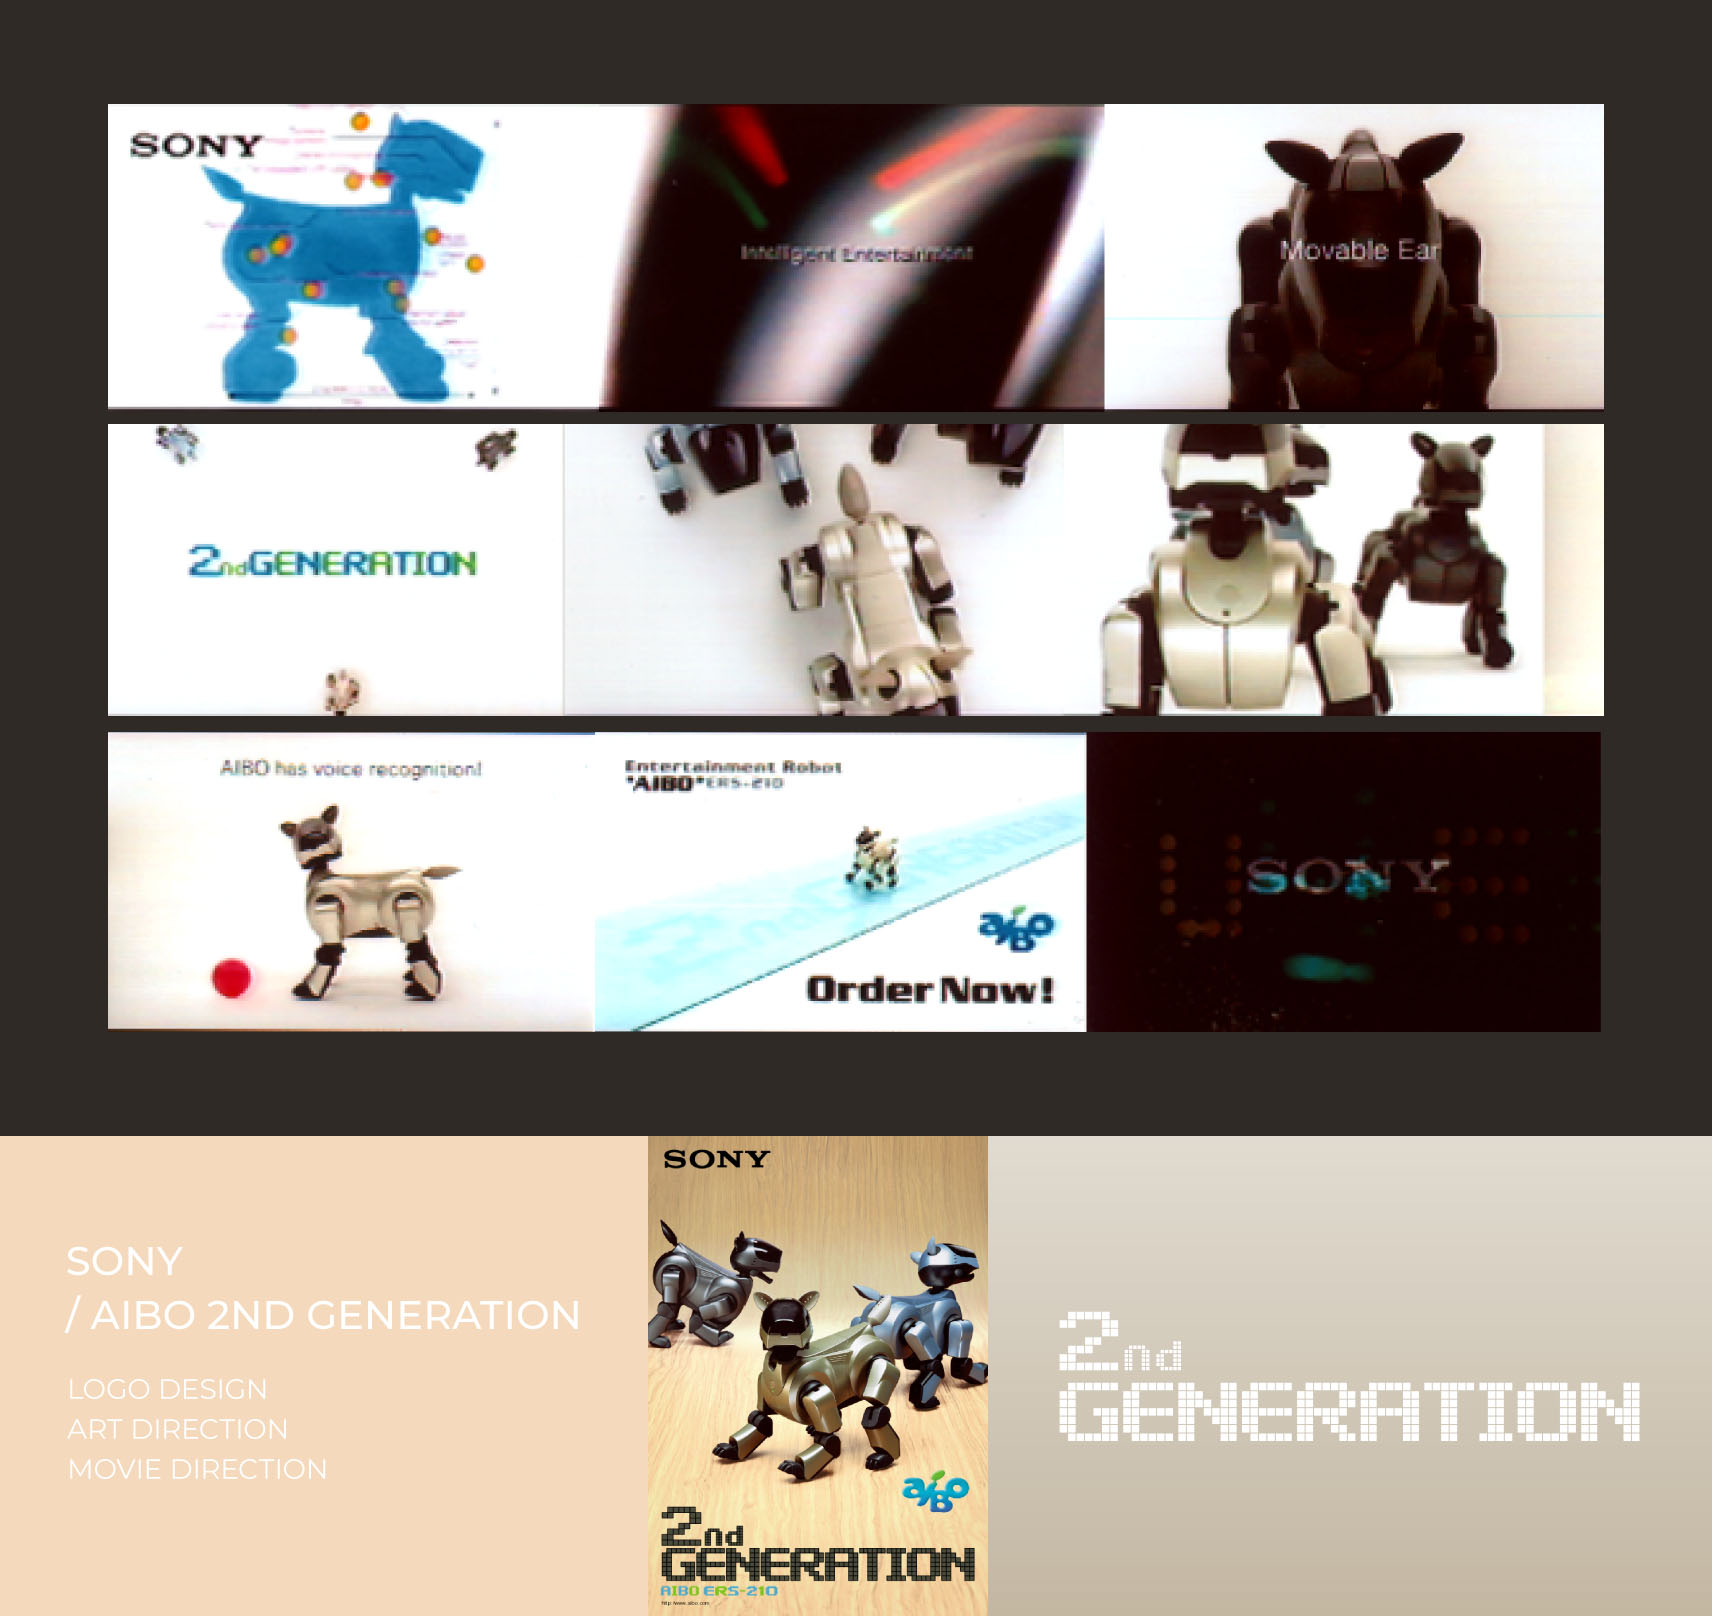 SONY / AIBO 2ND GENERATION - LOGO DESIGN ART DIRECTION MOVIE DIRECTION